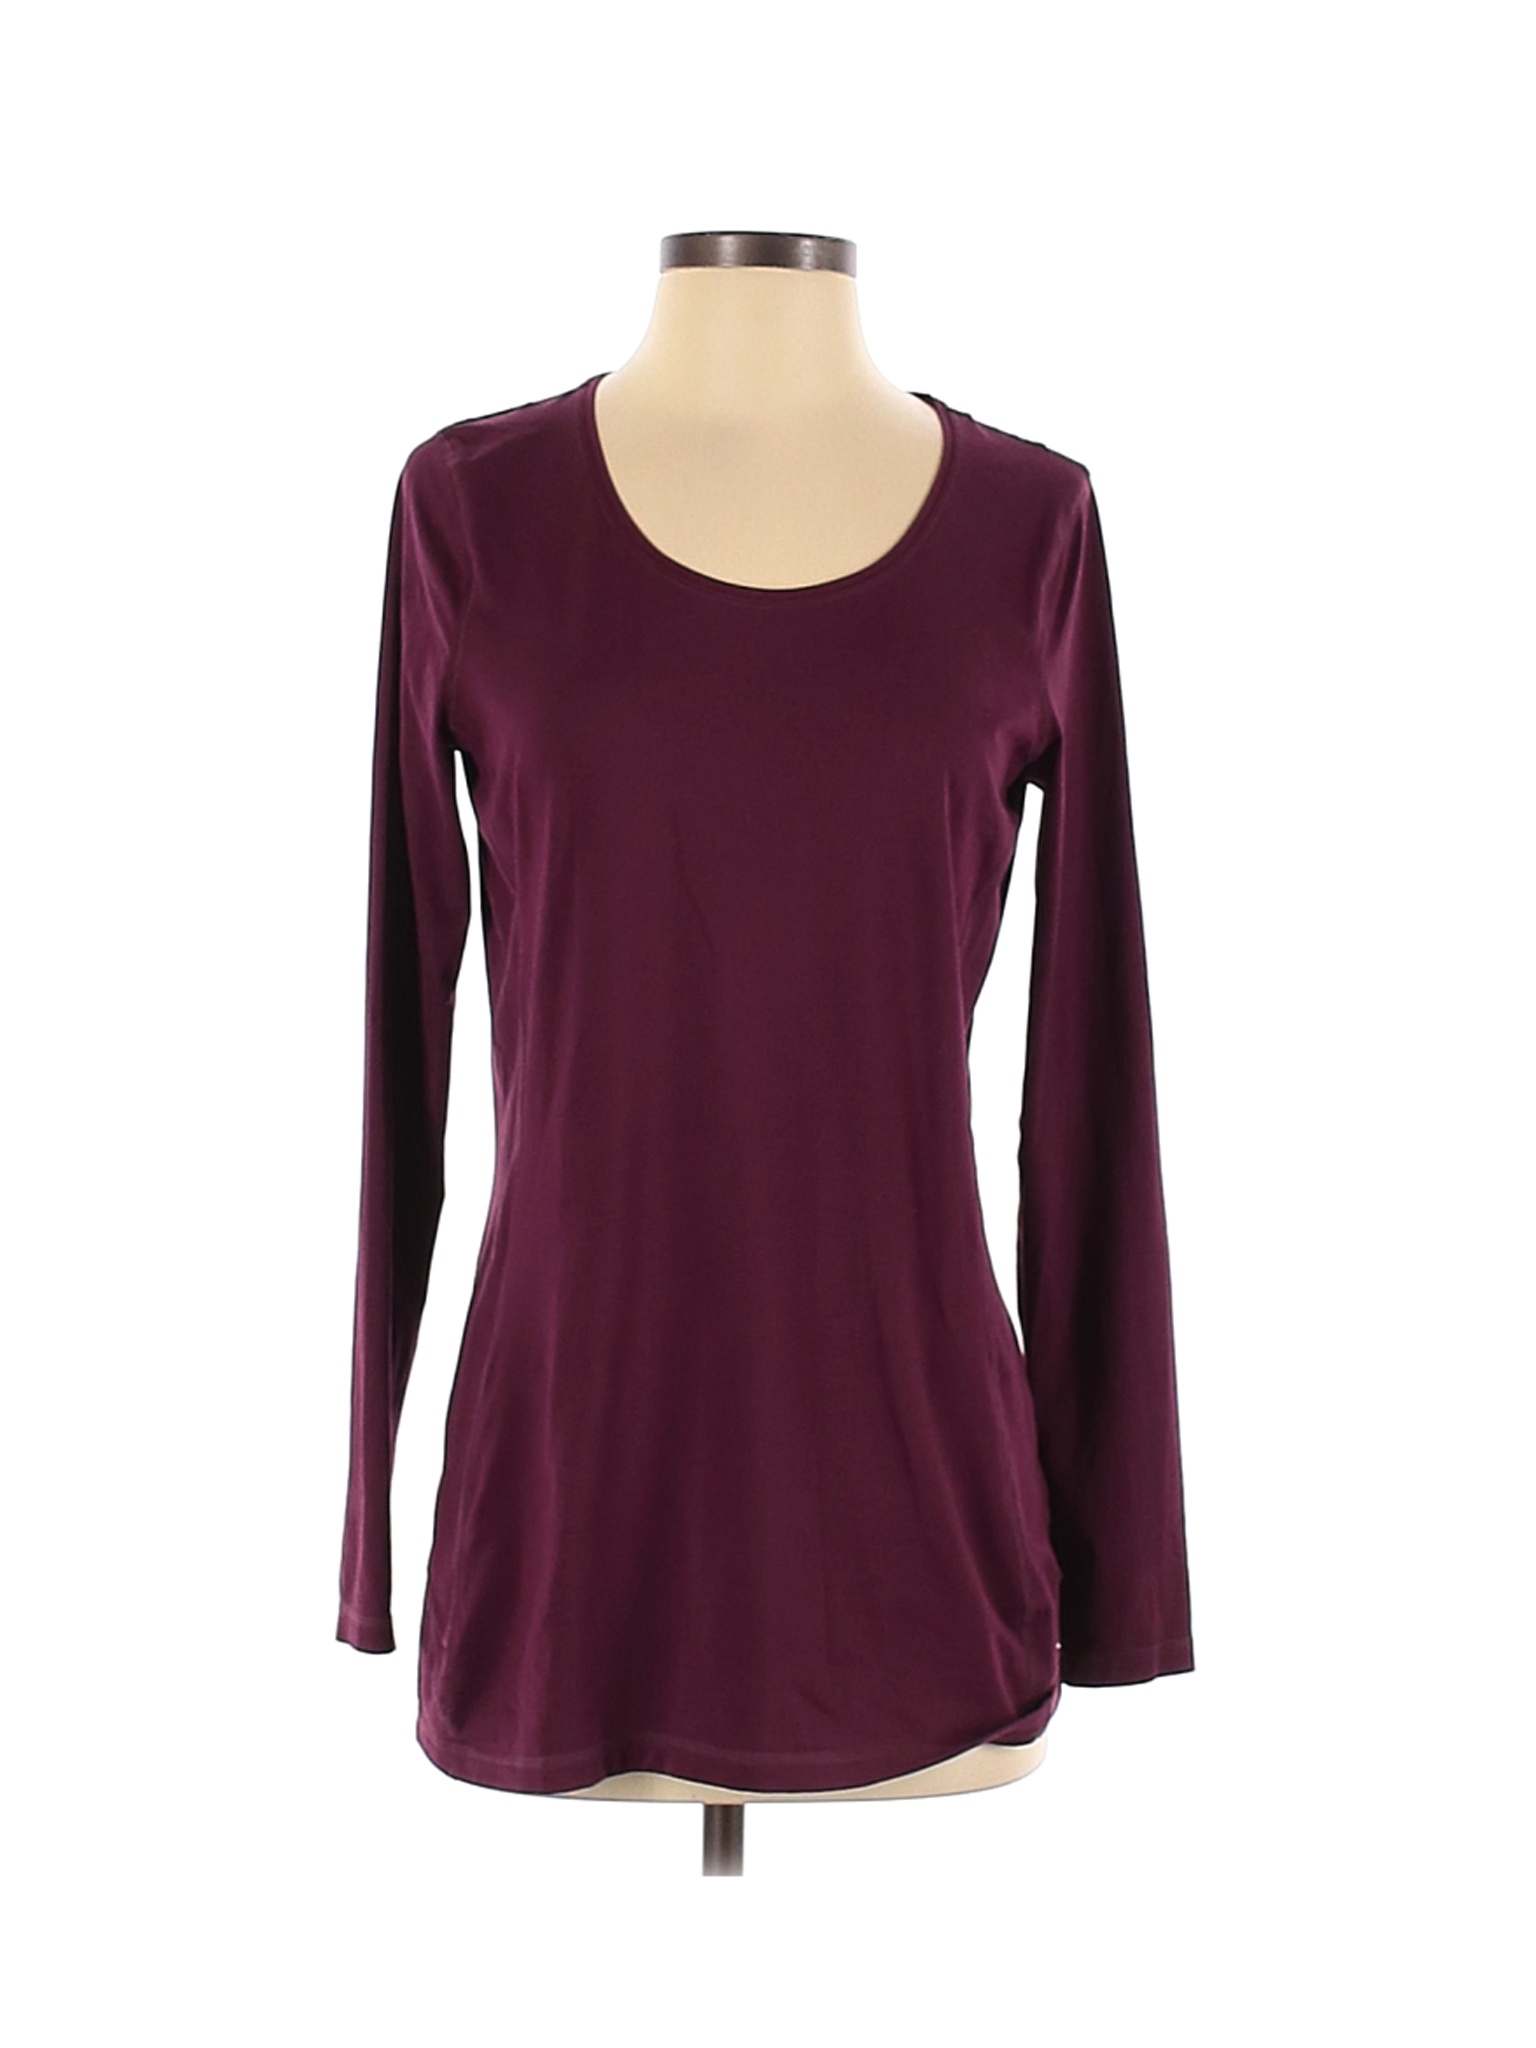 Lands' End Women Purple Long Sleeve T-Shirt XS | eBay